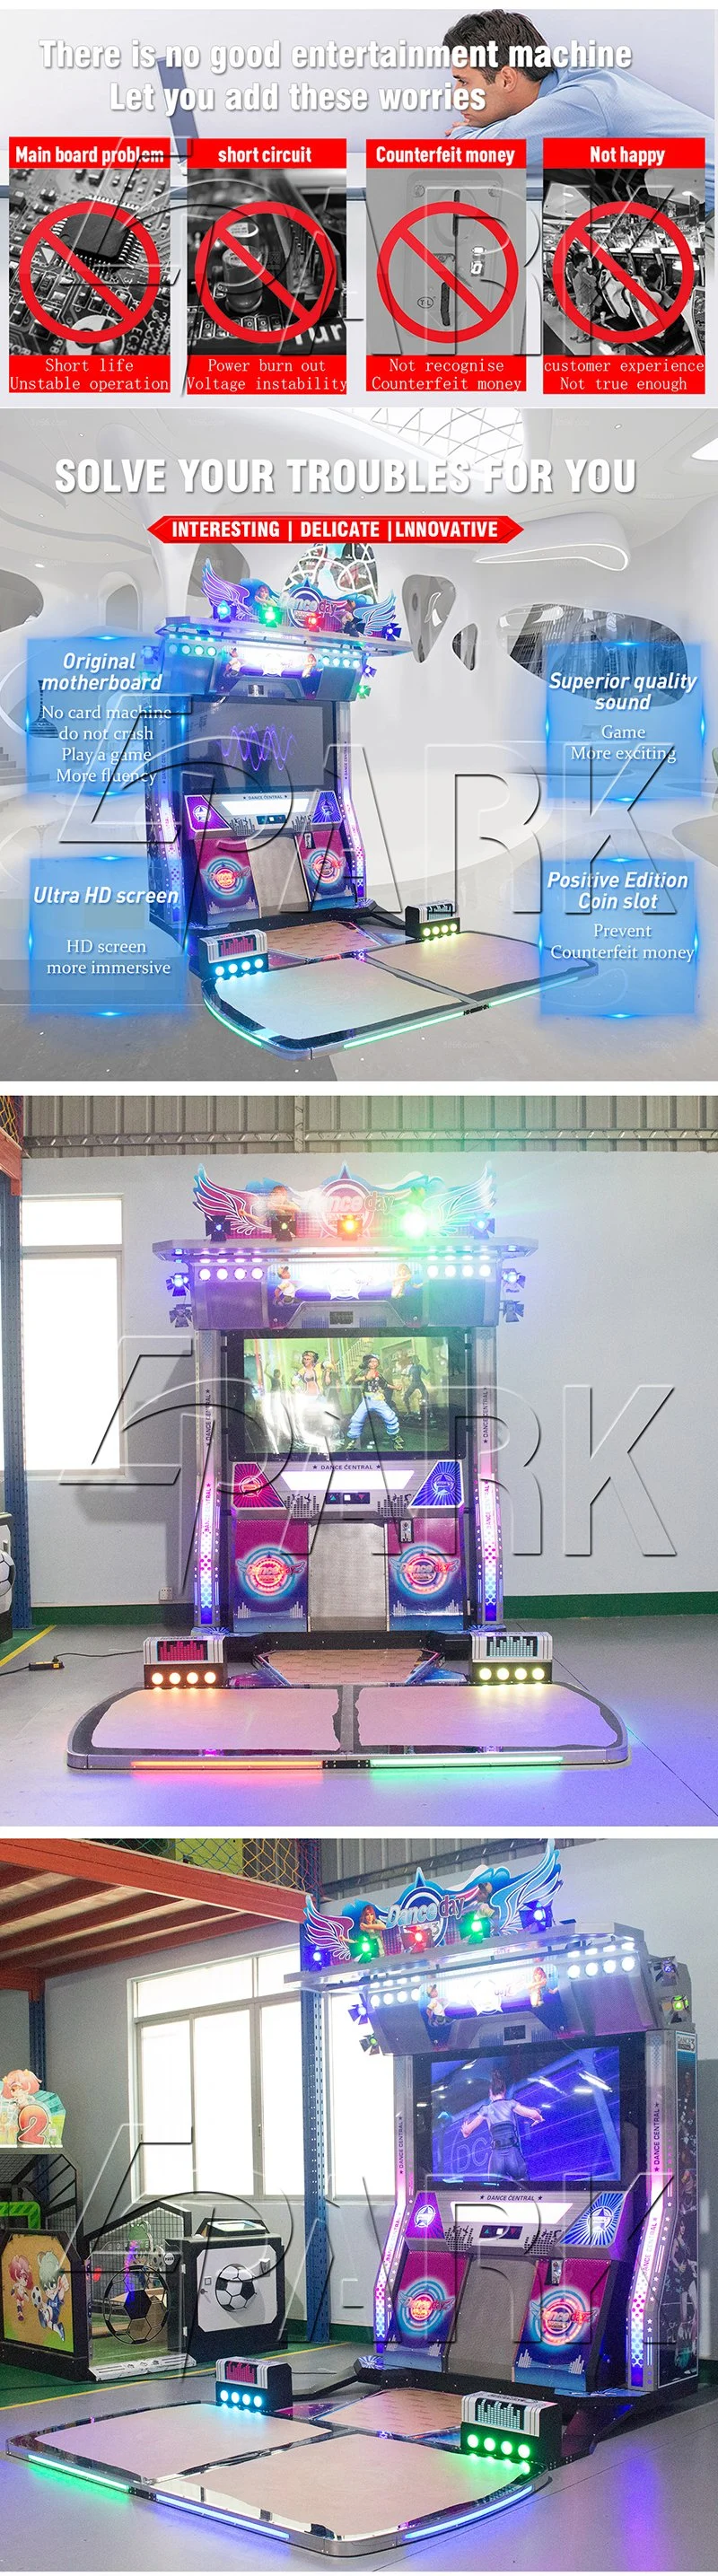 Danz Base Dance Music Amusement Arcade Video Game Console